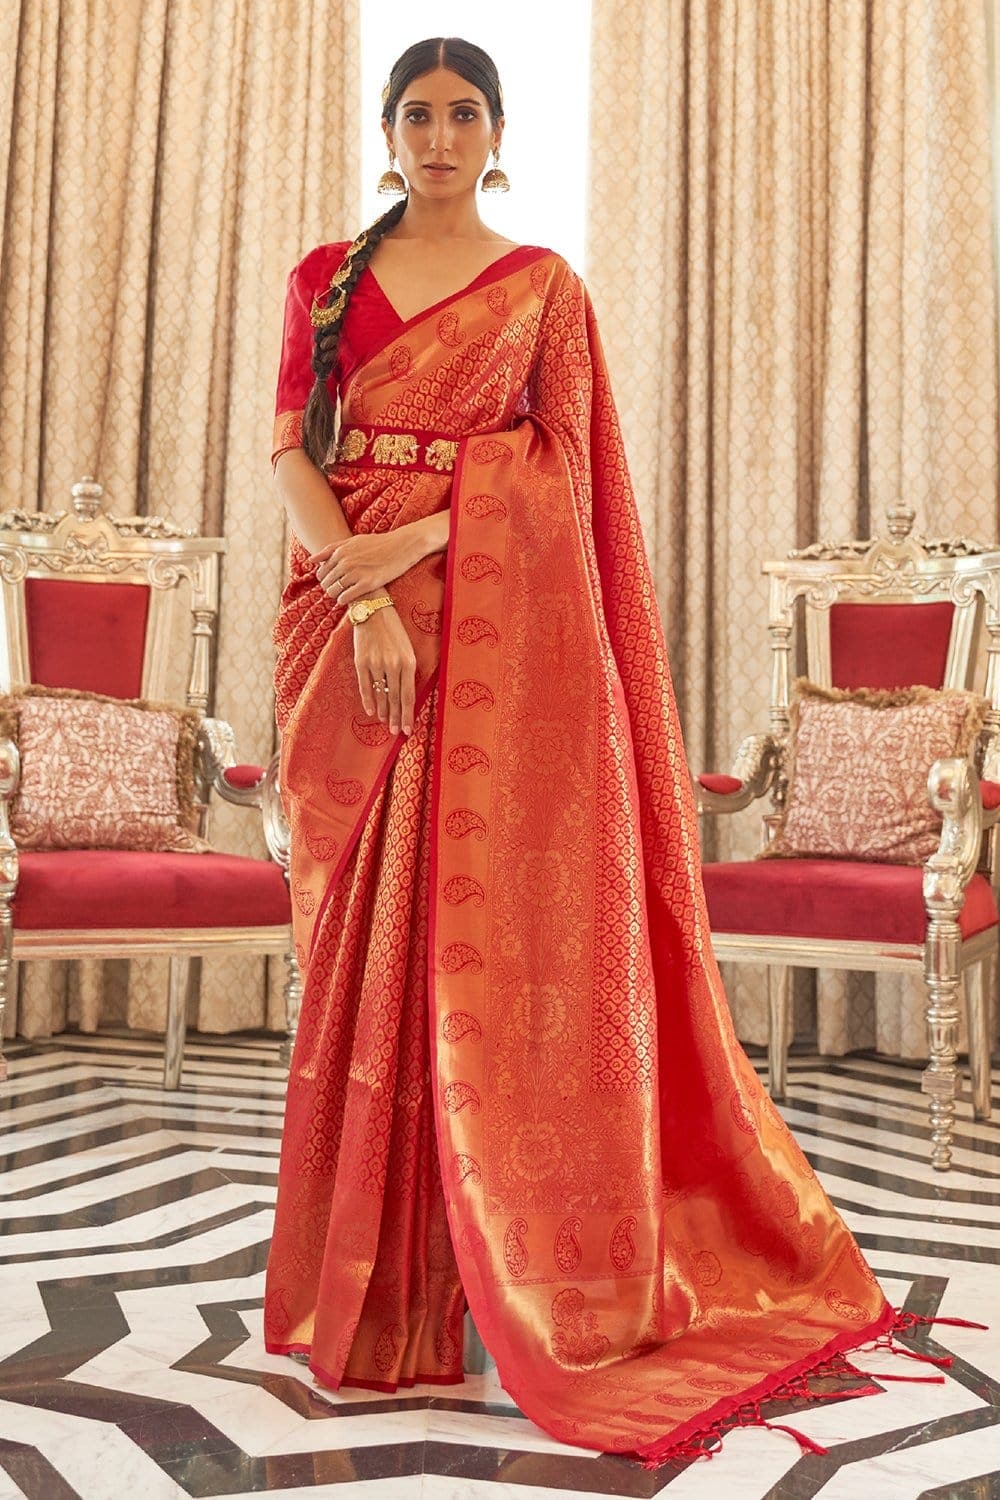 Women's Kanjivaram Kanchipuram Soft Silk Saree design golden zari With  jacquard Blouse Piece (Pink) at Rs 650 | Jewellery Set in Surat | ID:  2851671477691